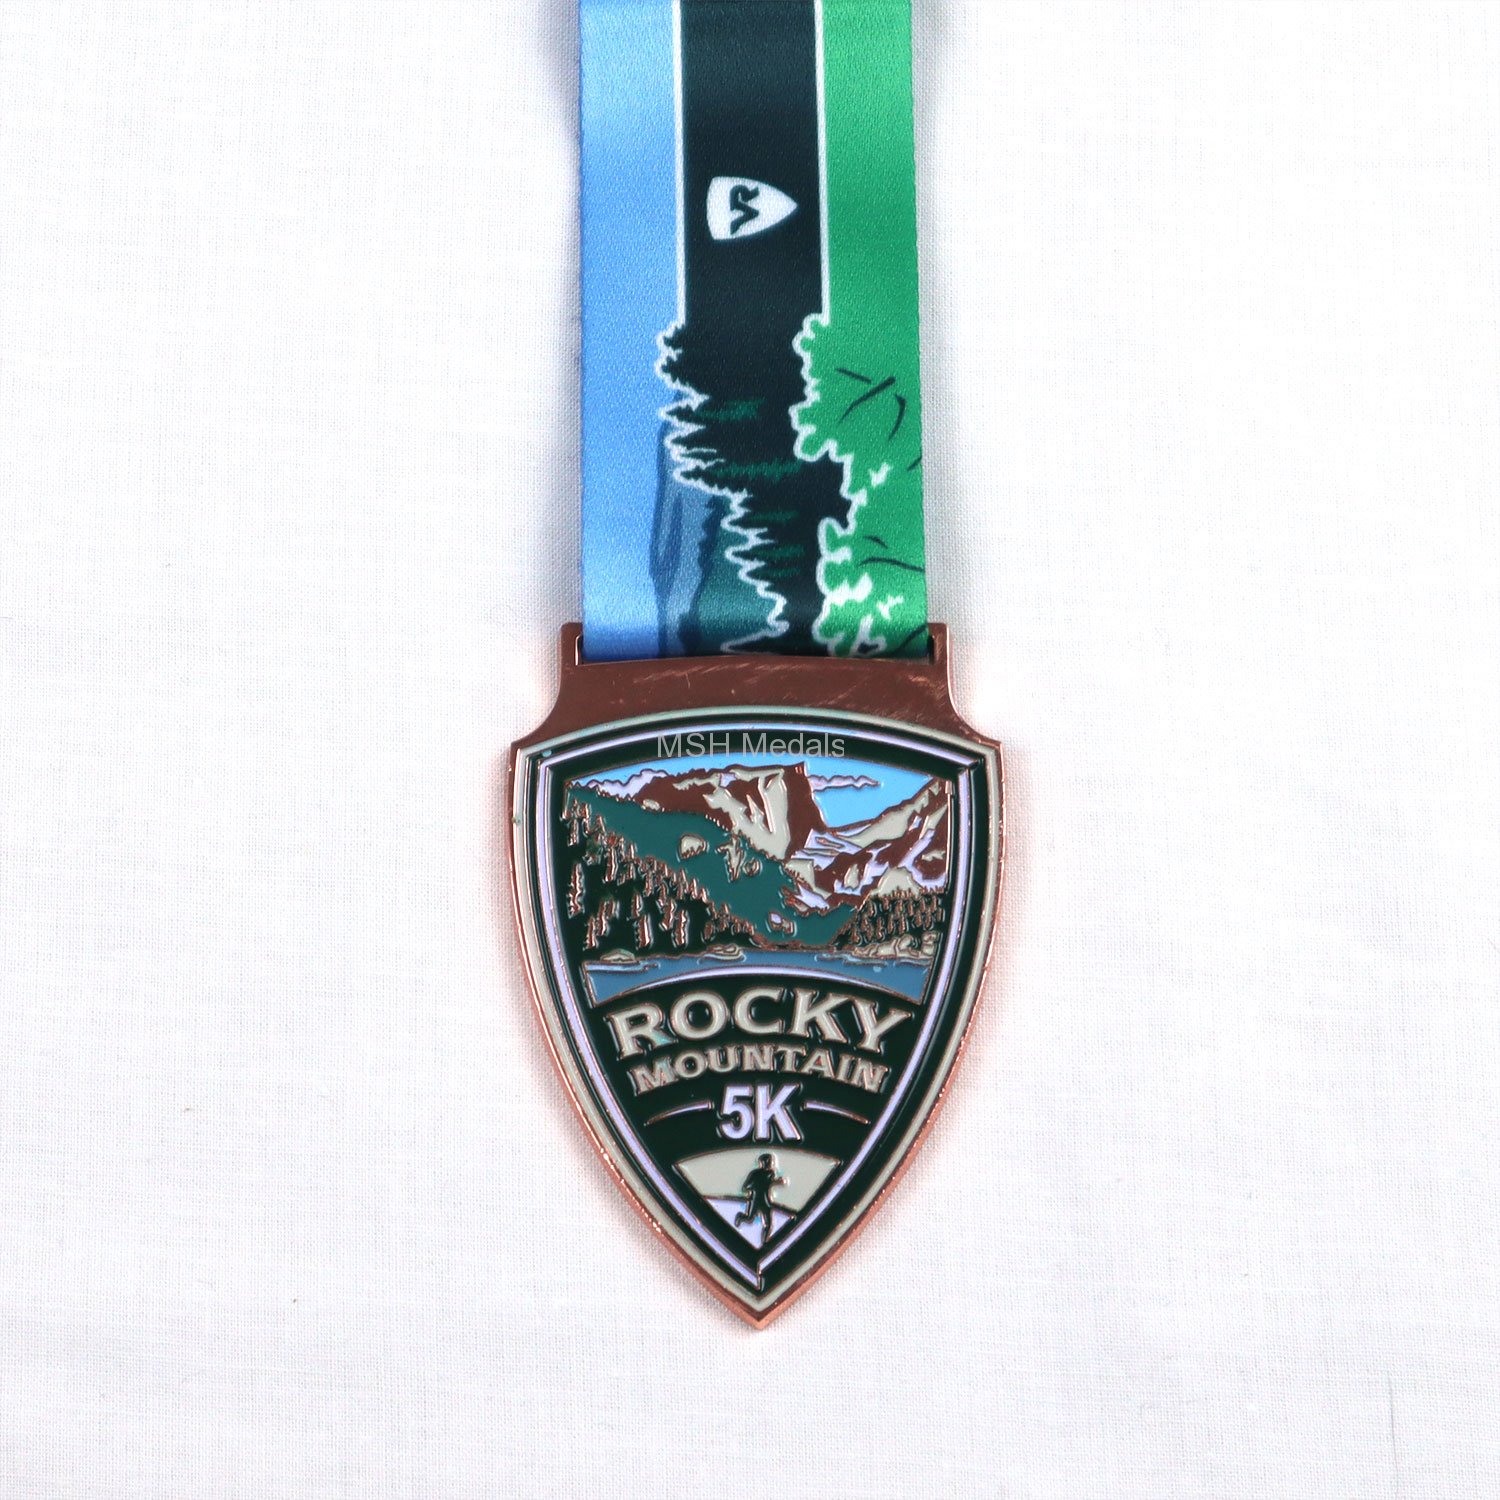 rocky mountain 5k medal